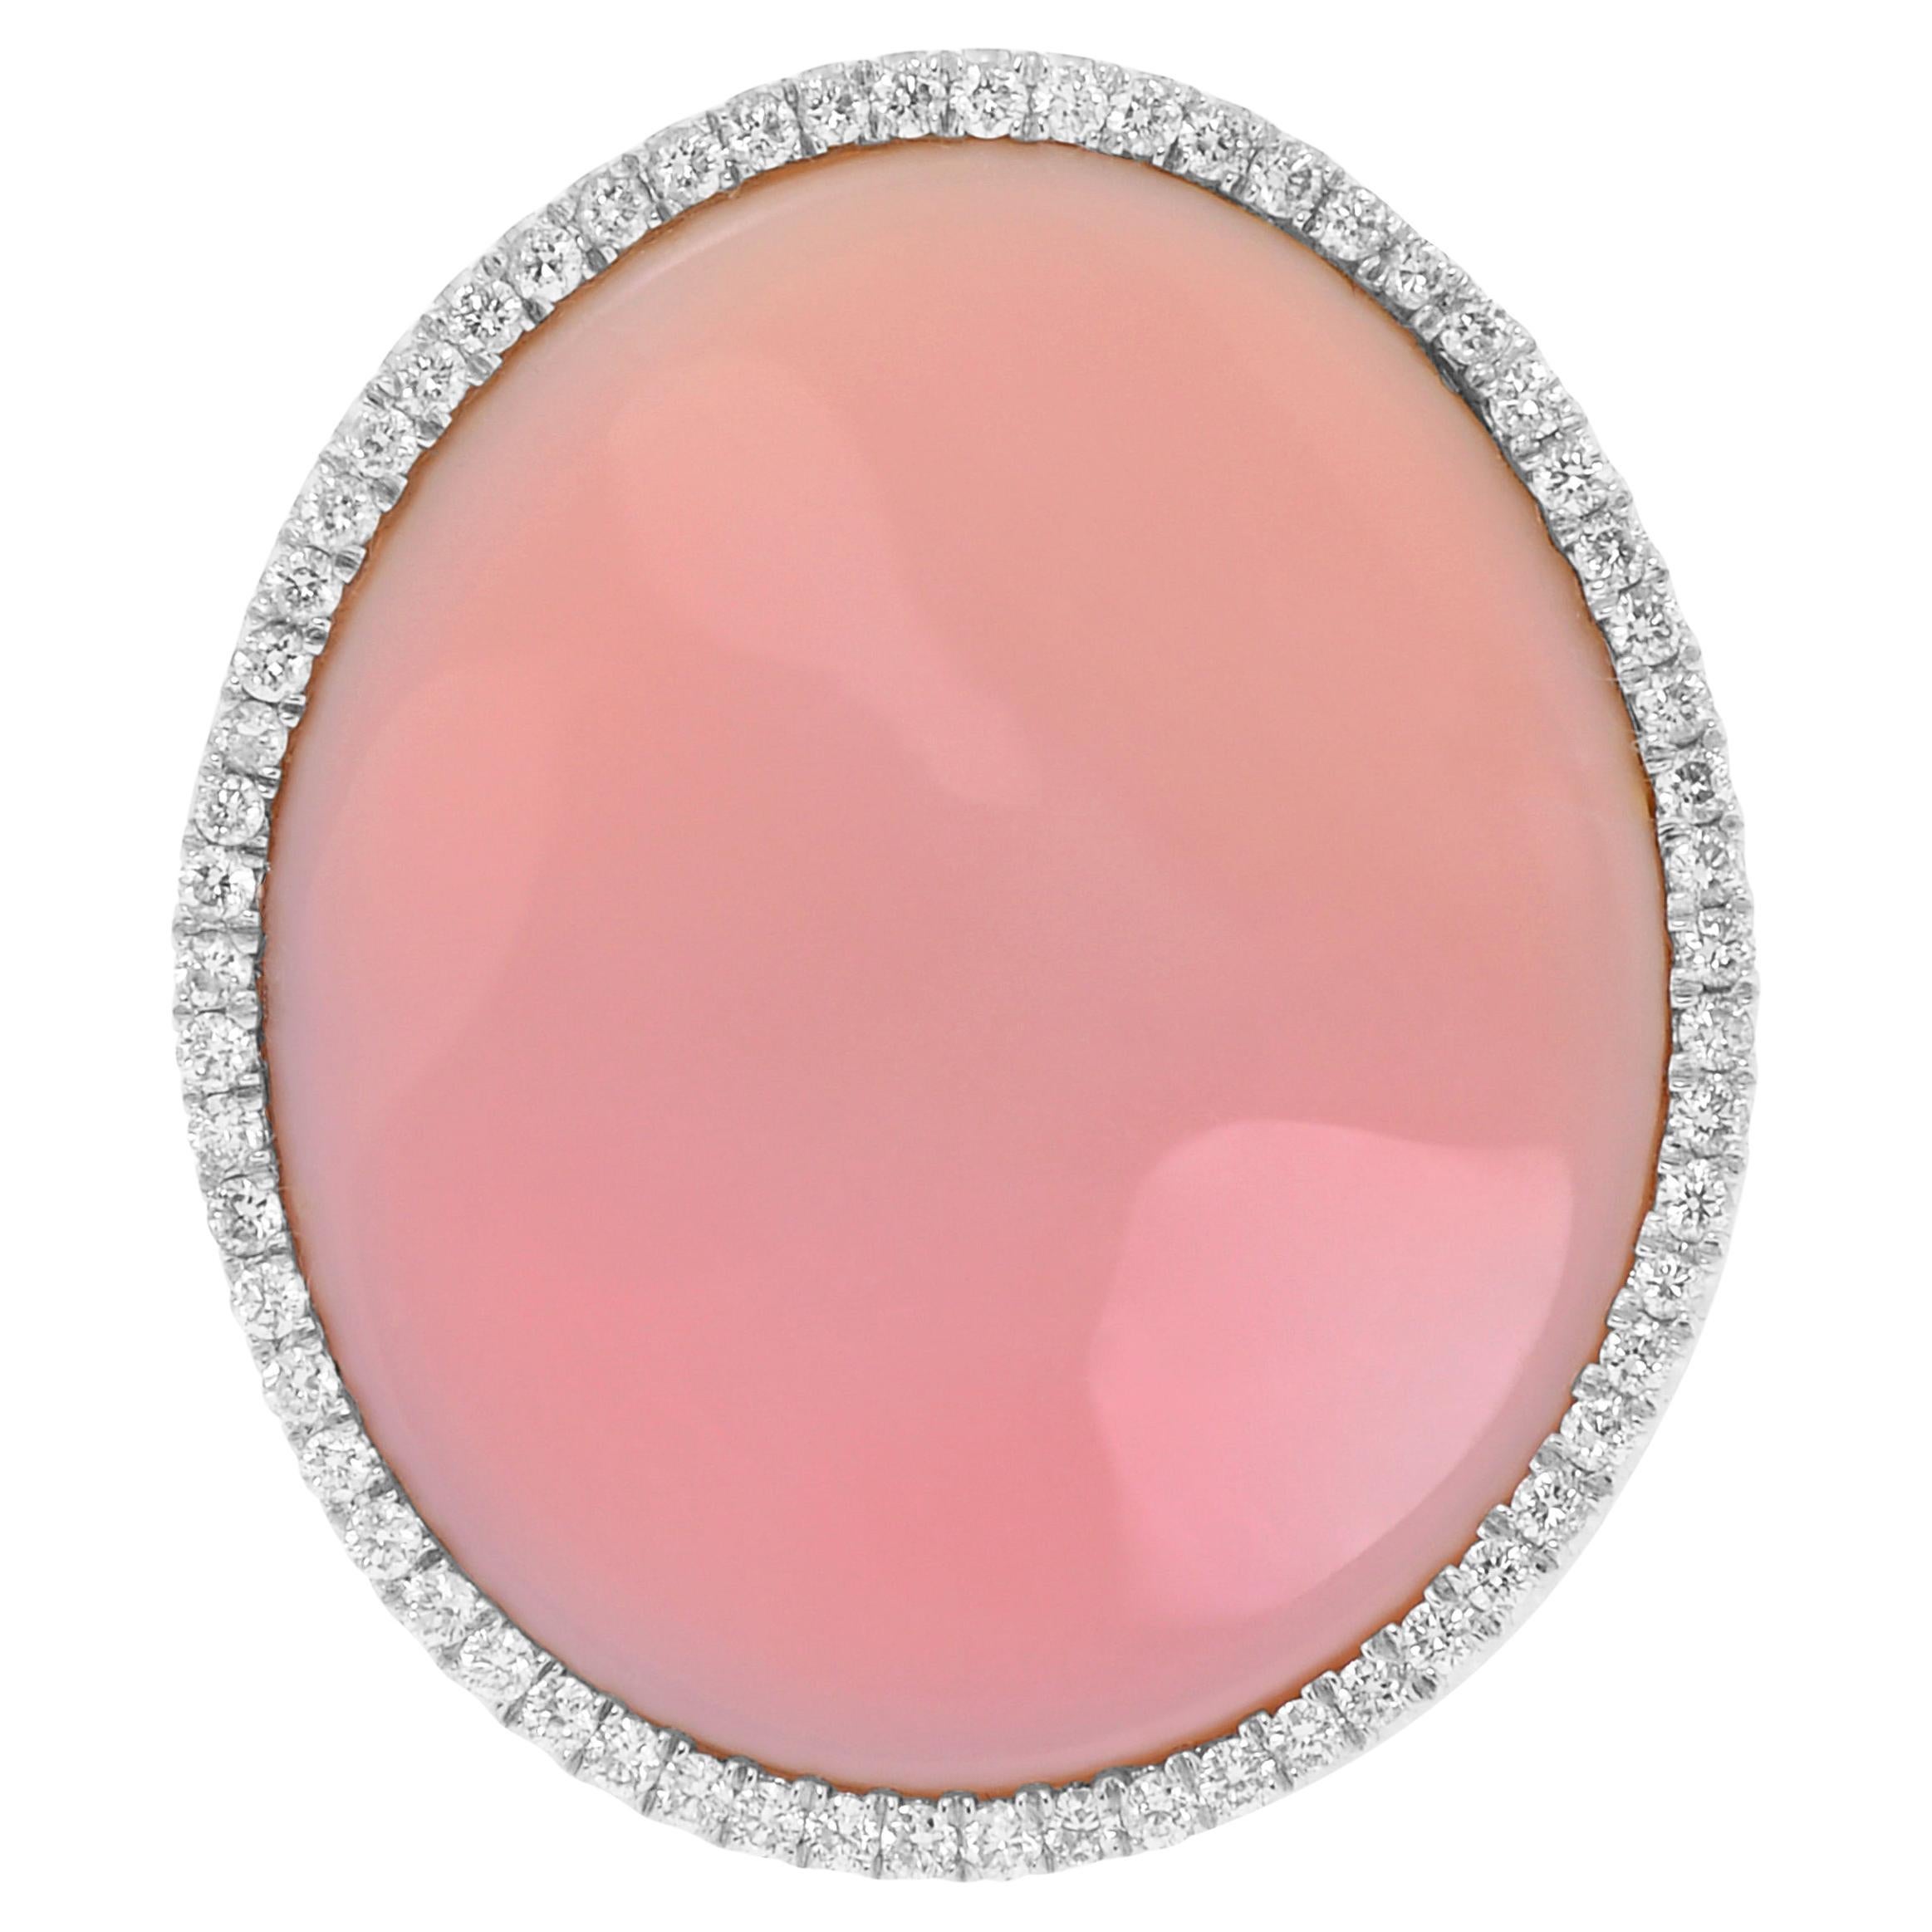 Mimi Milano Aurora 18K White Gold, MoP & Diamond Statement Ring sz 7.25 For Sale